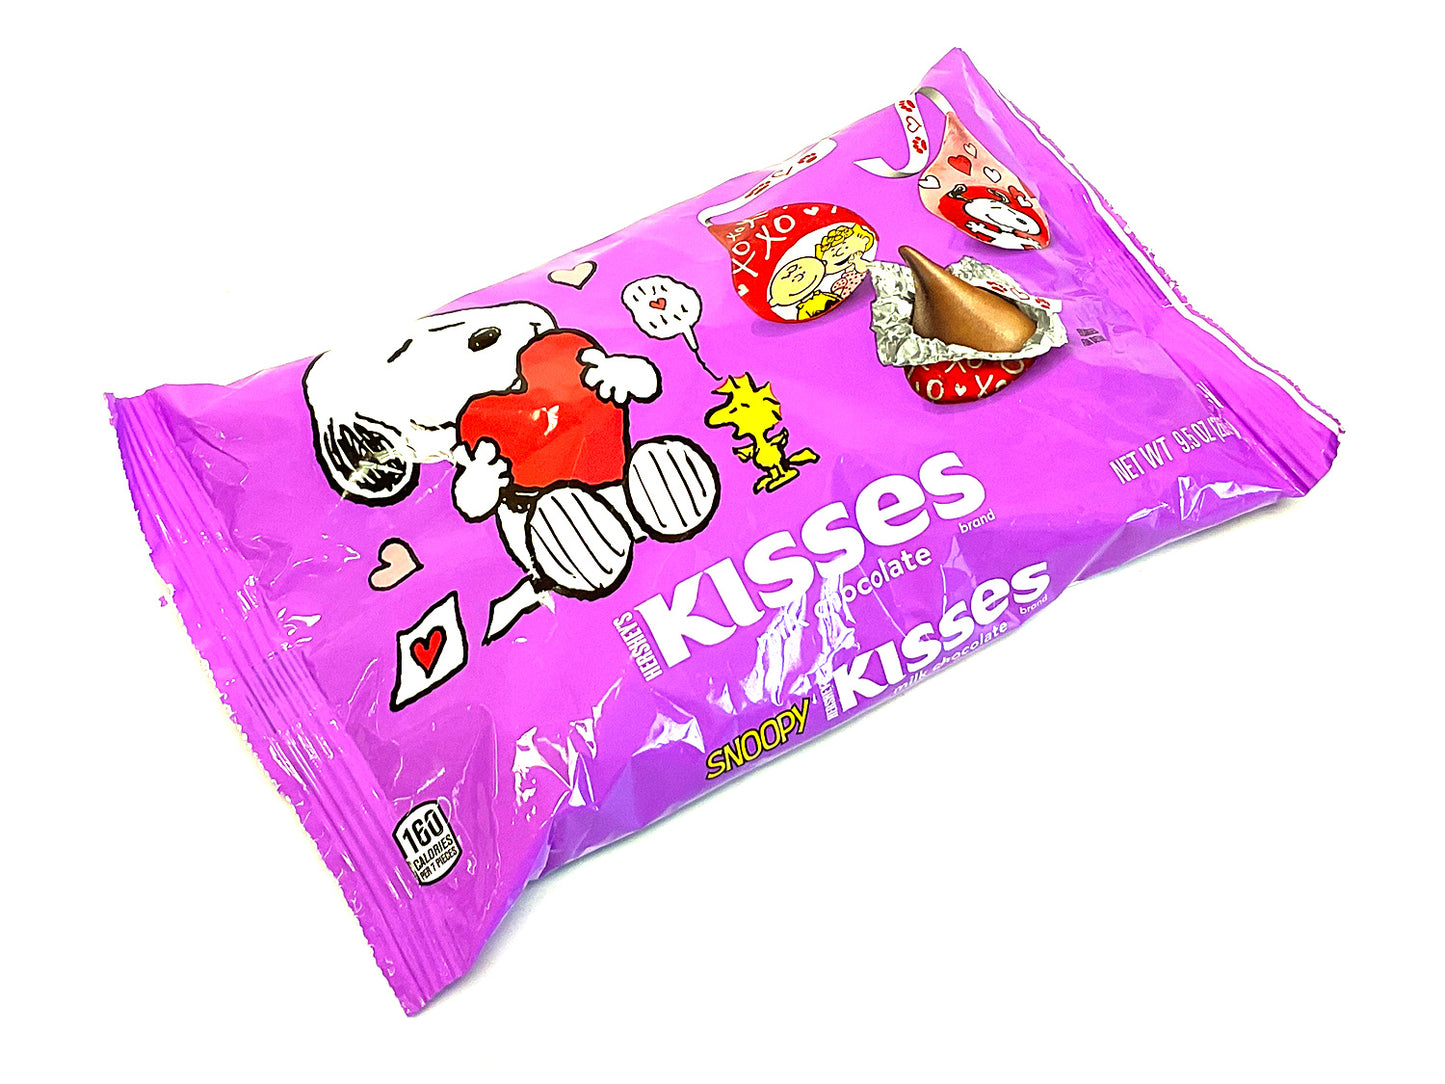 Hershey's Kisses Snoopy - 9.5 oz bag